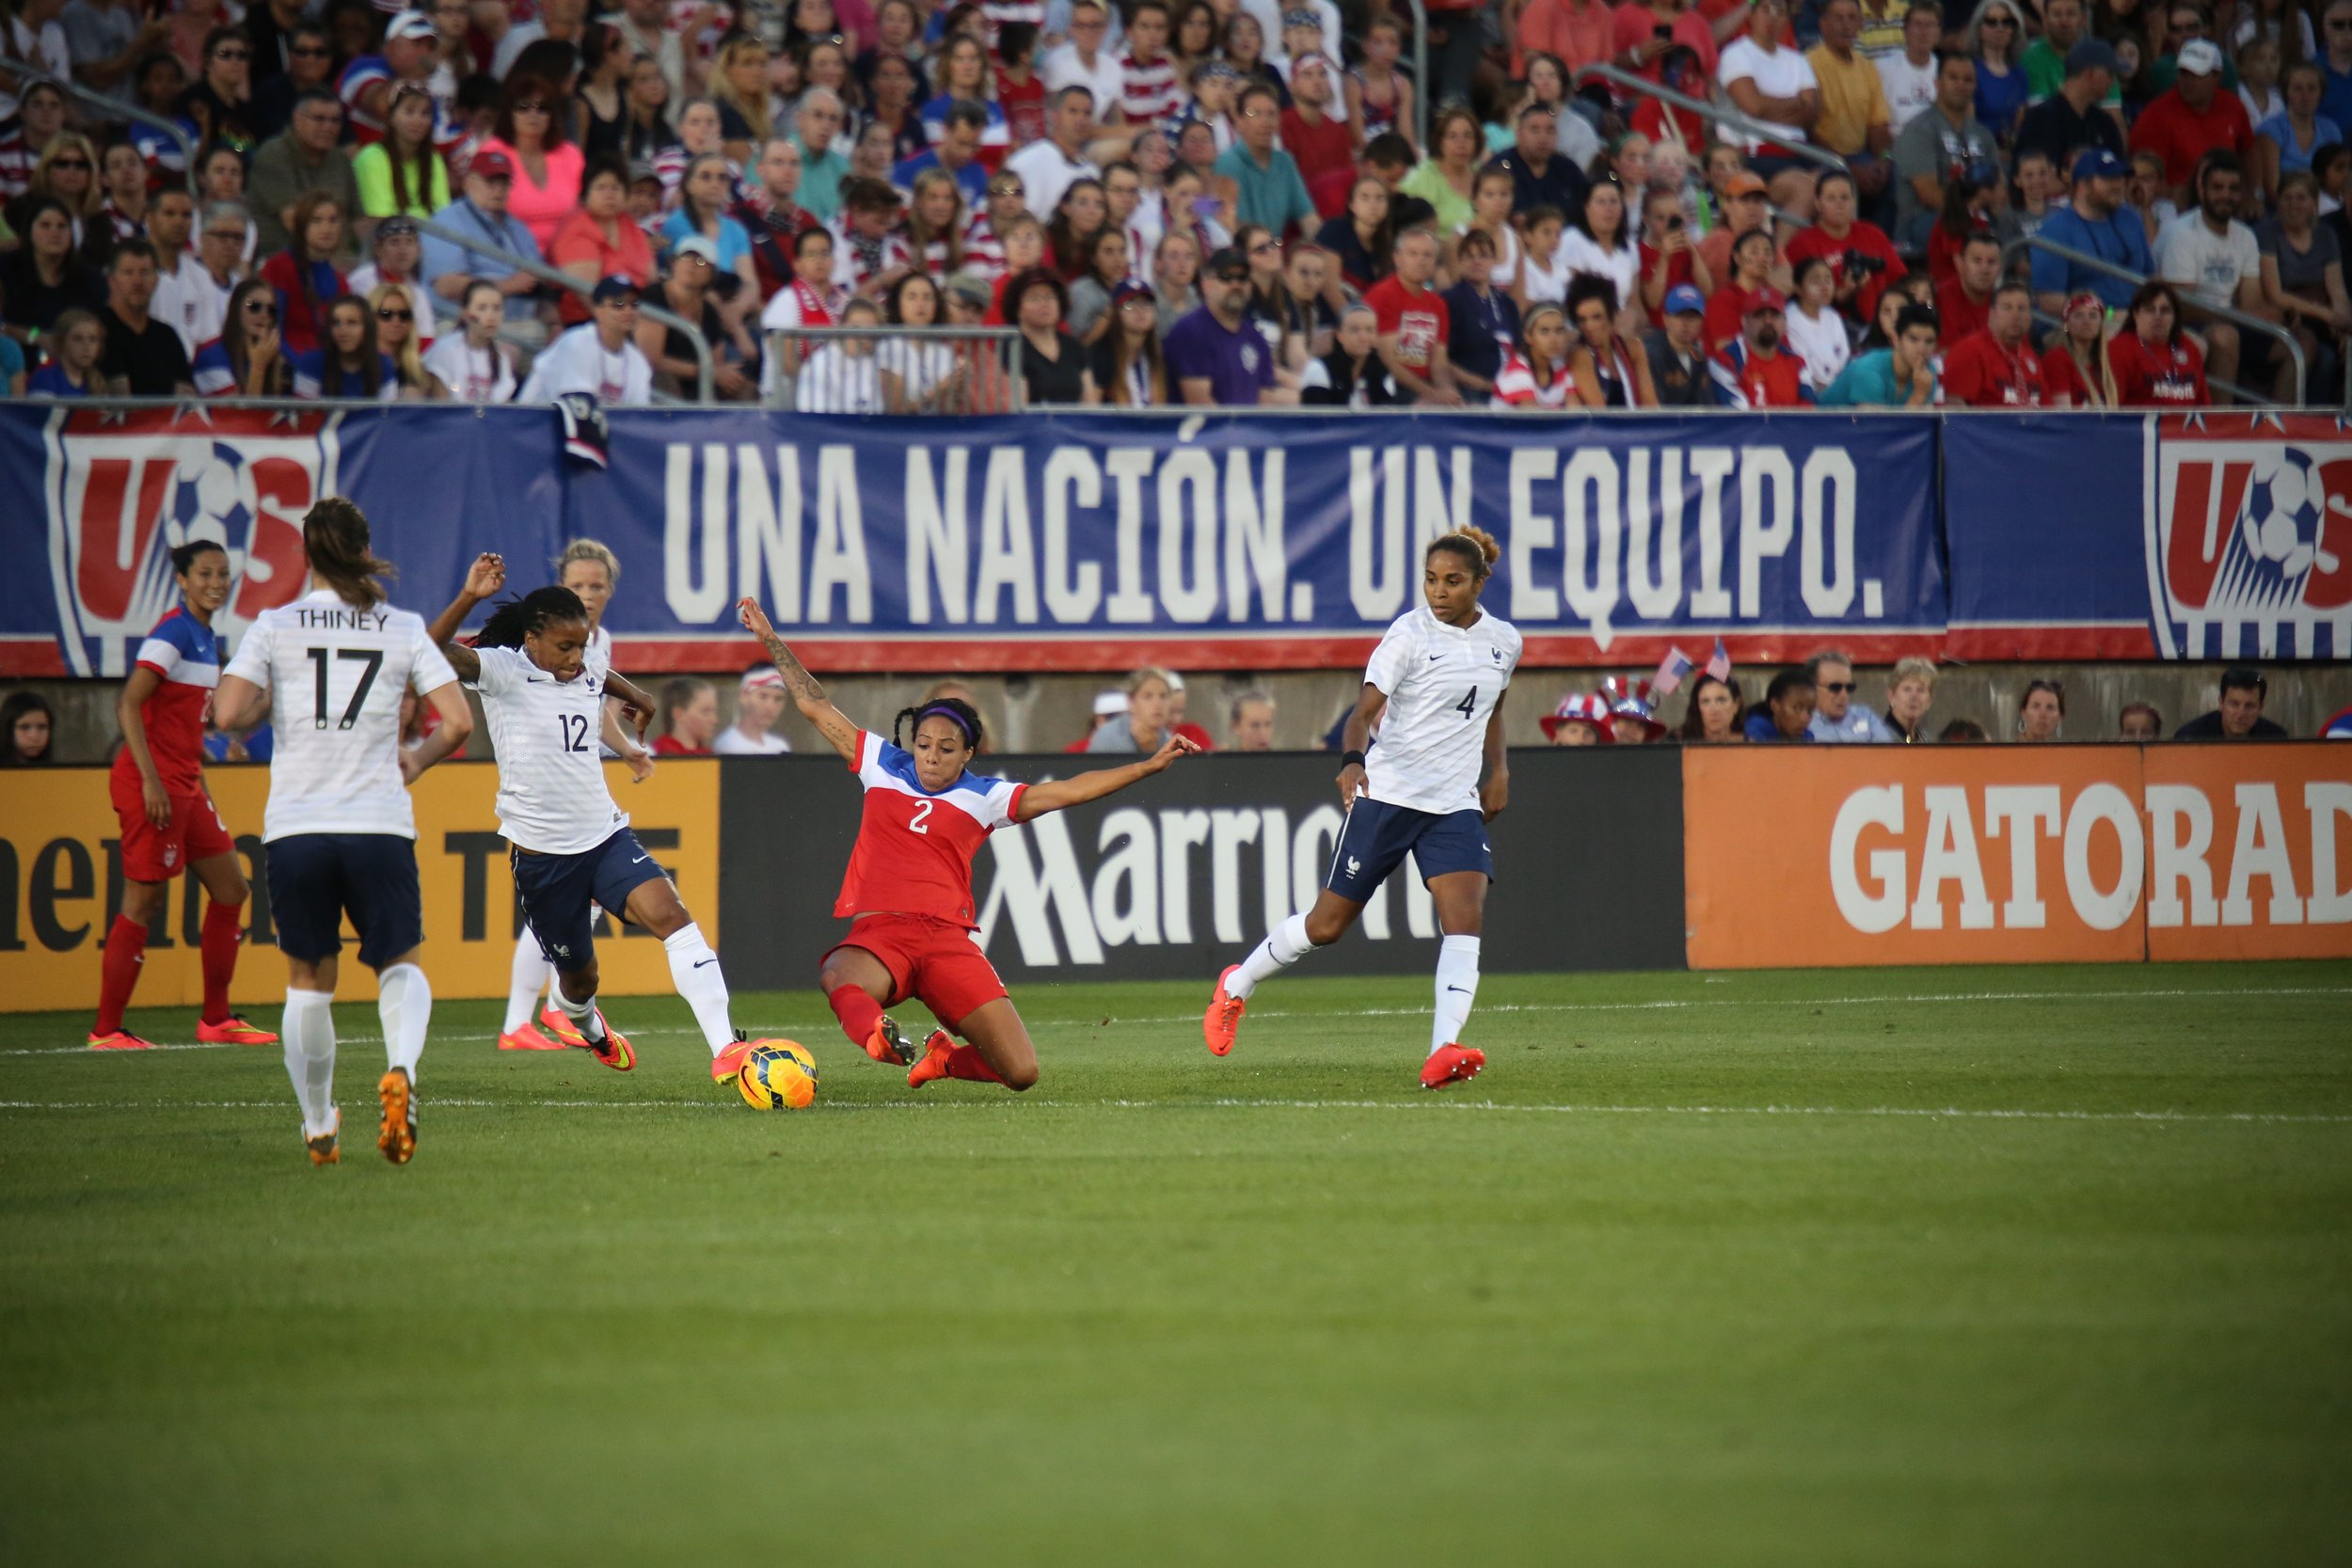 Etats-Unis-France Féminine - Match amical, 20 juin 2014.jpg